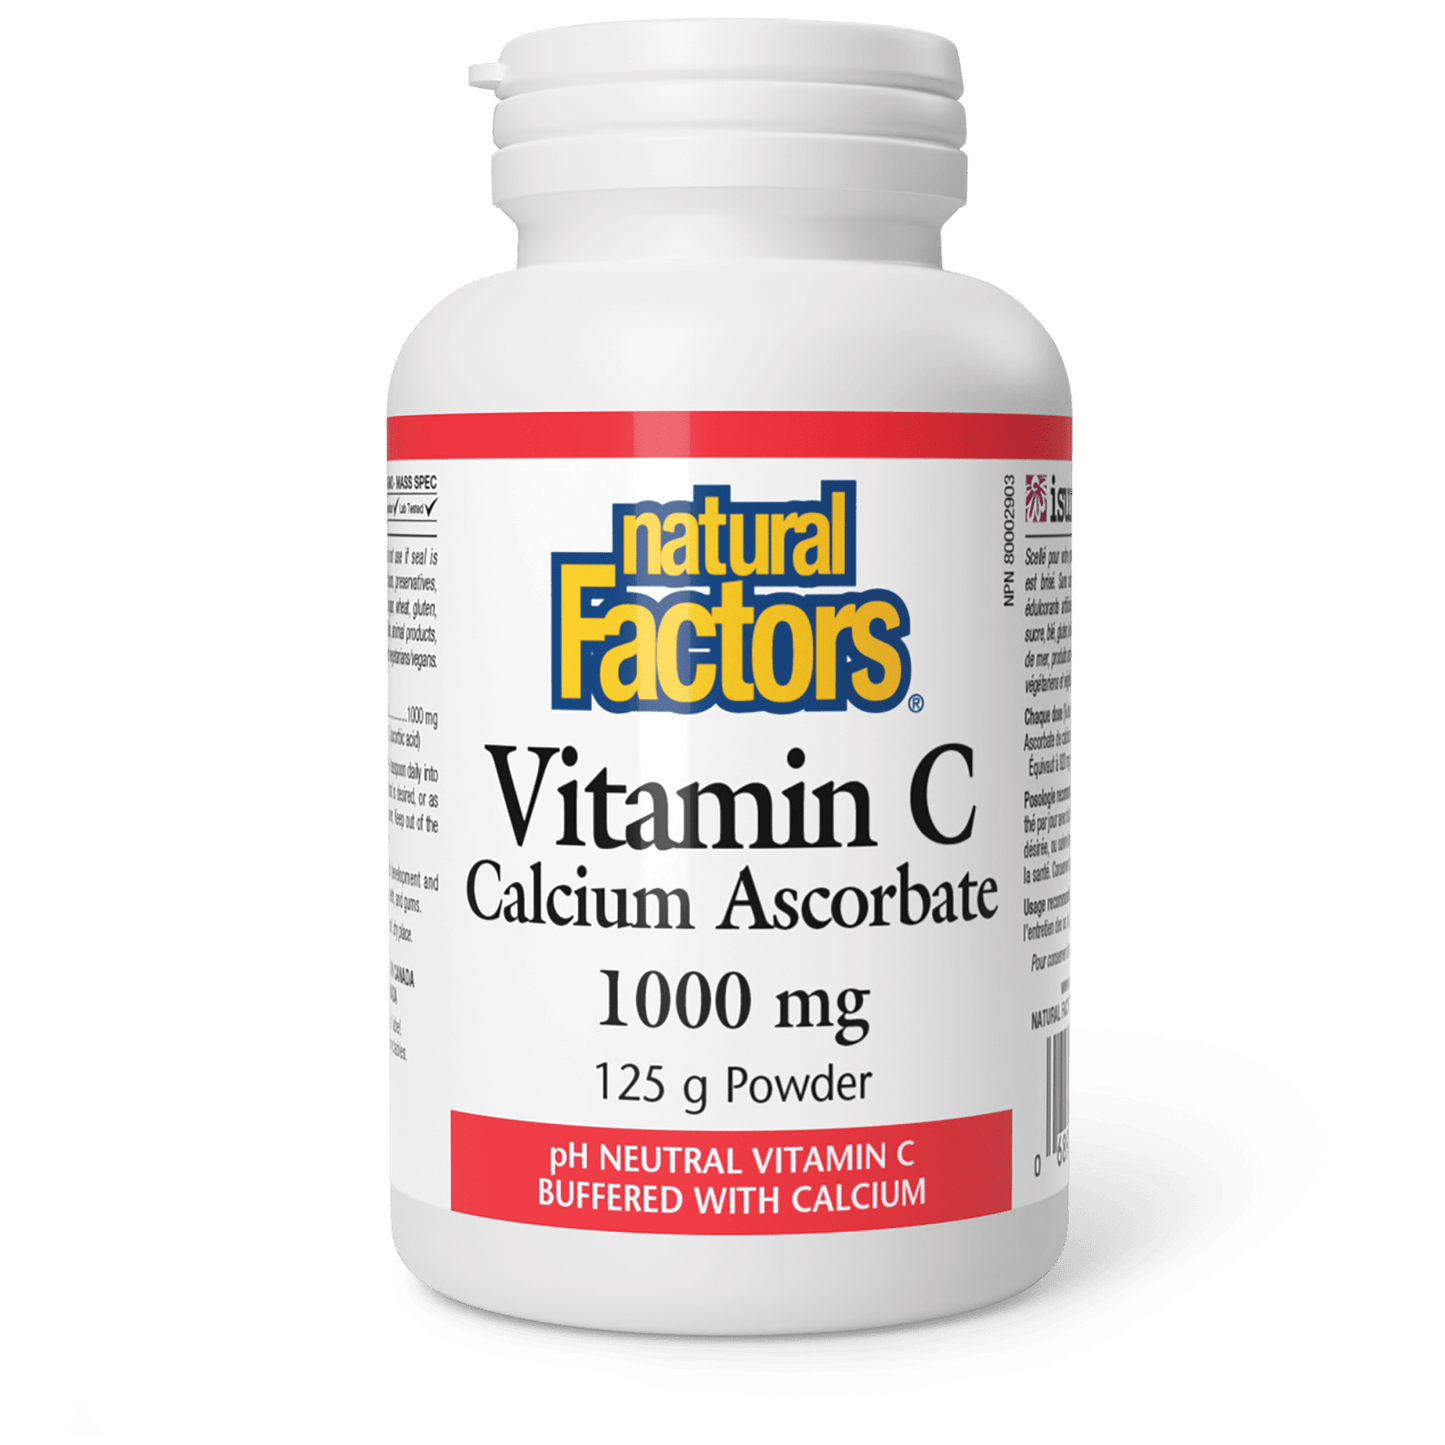 Vitamine C Ascorbate de calcium 1 000 mg, Natural Factors|v|image|1370